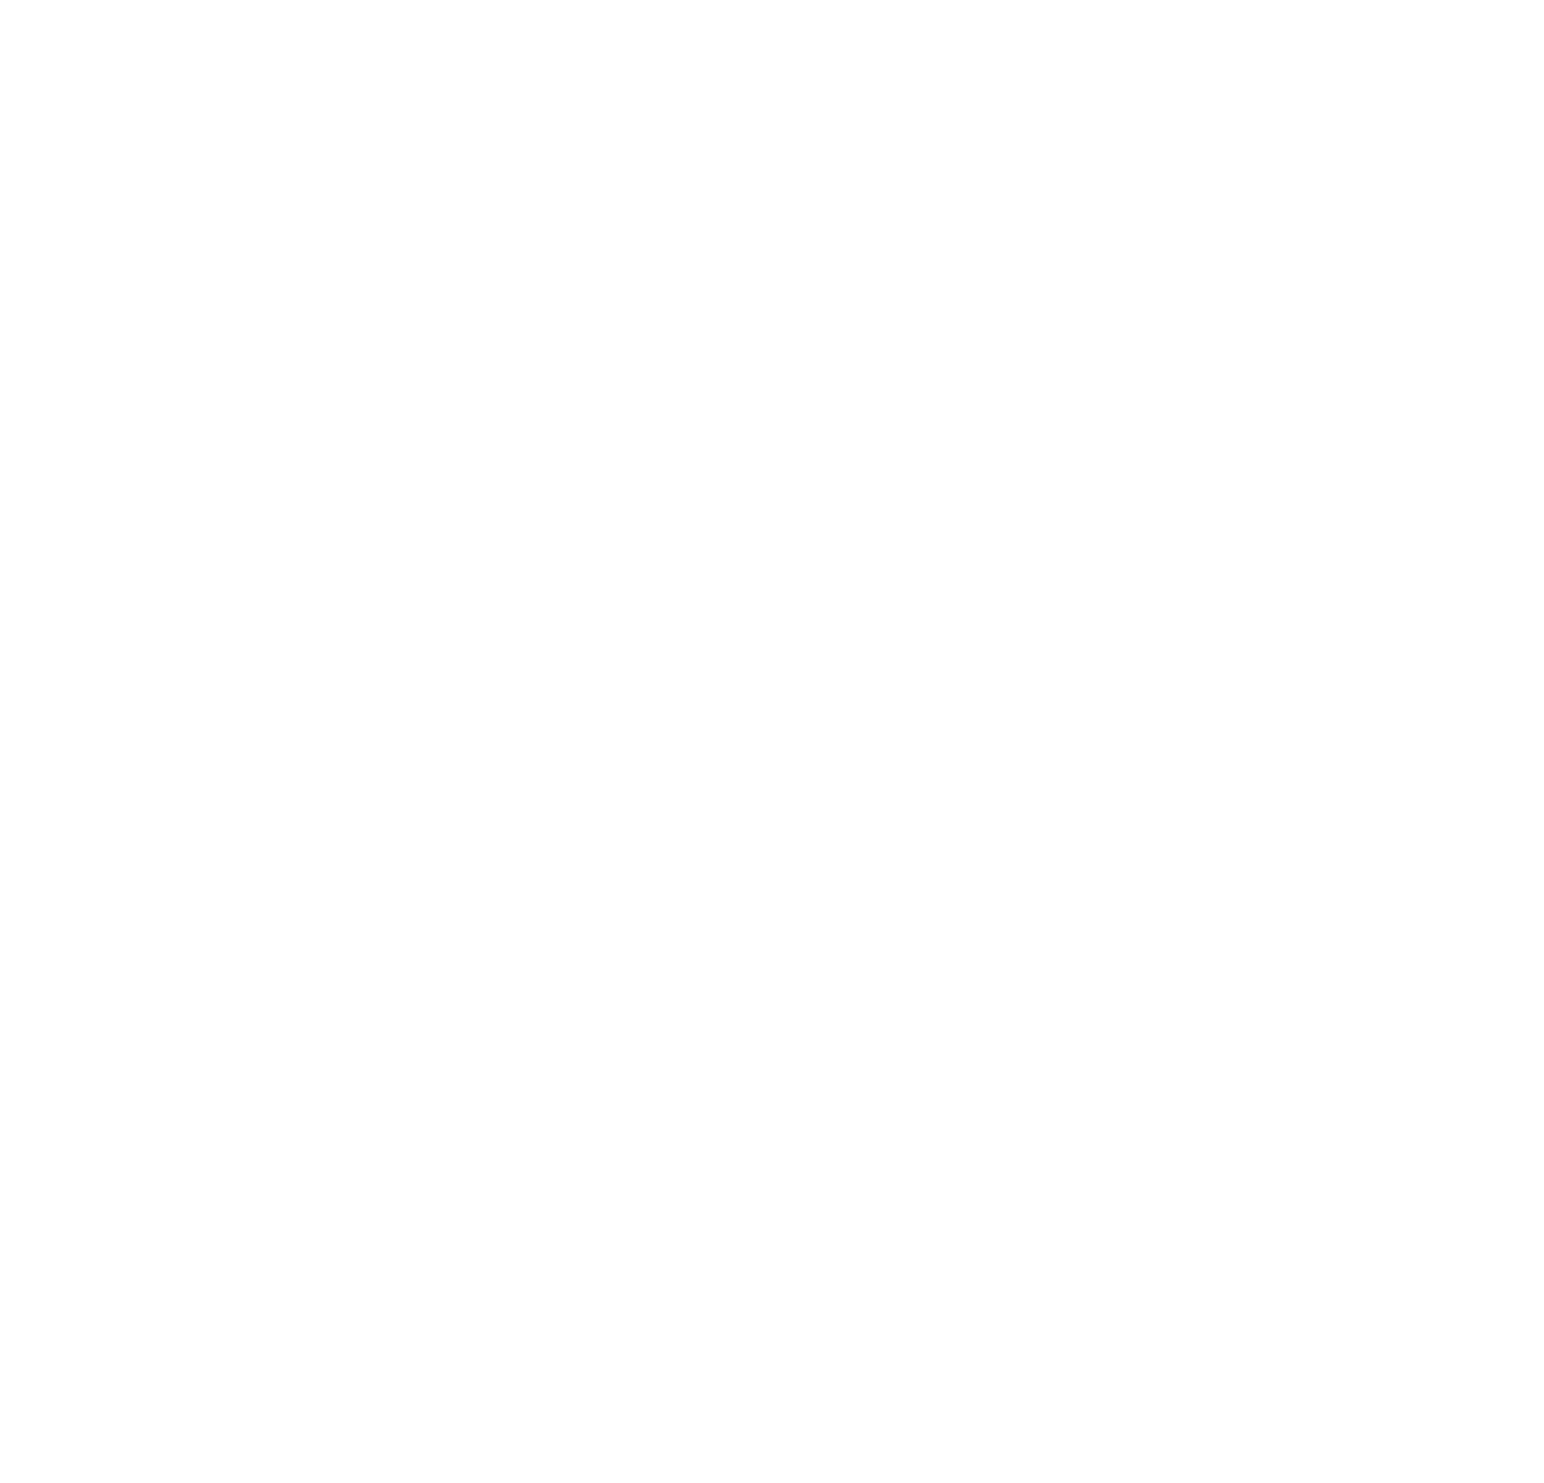 Creative Konnection